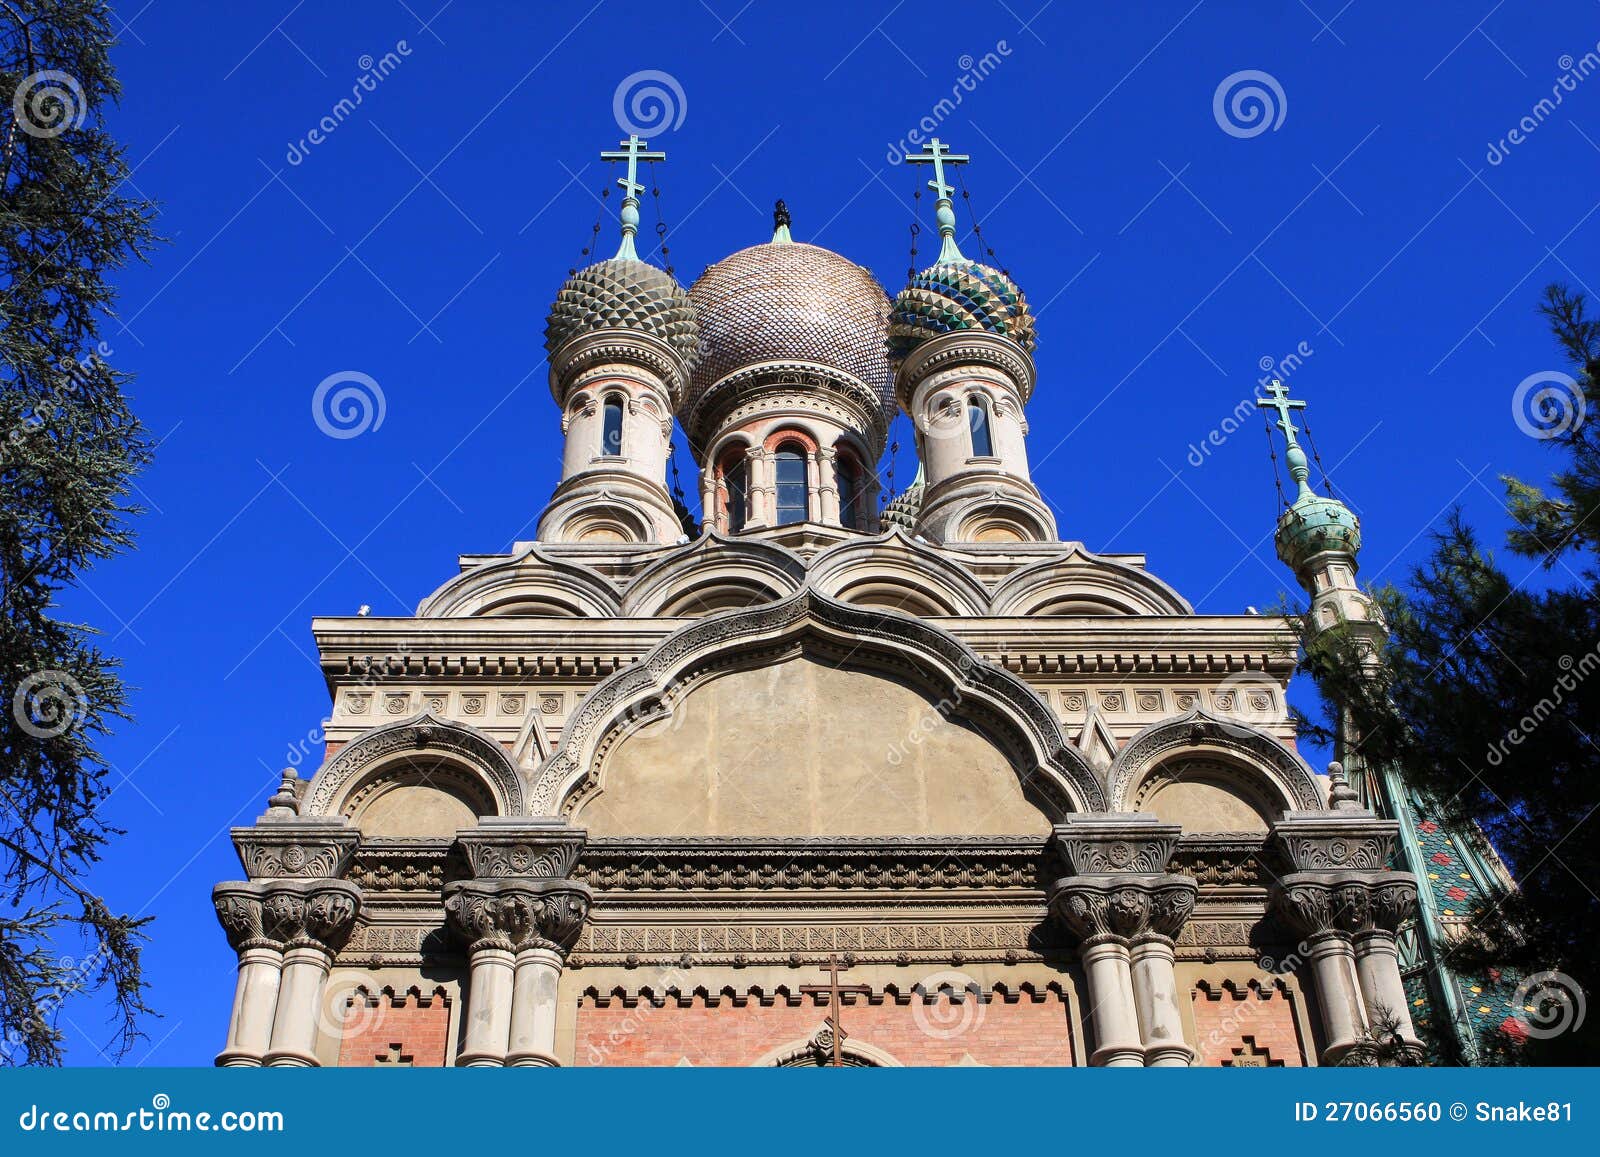 orthodox church, san remo